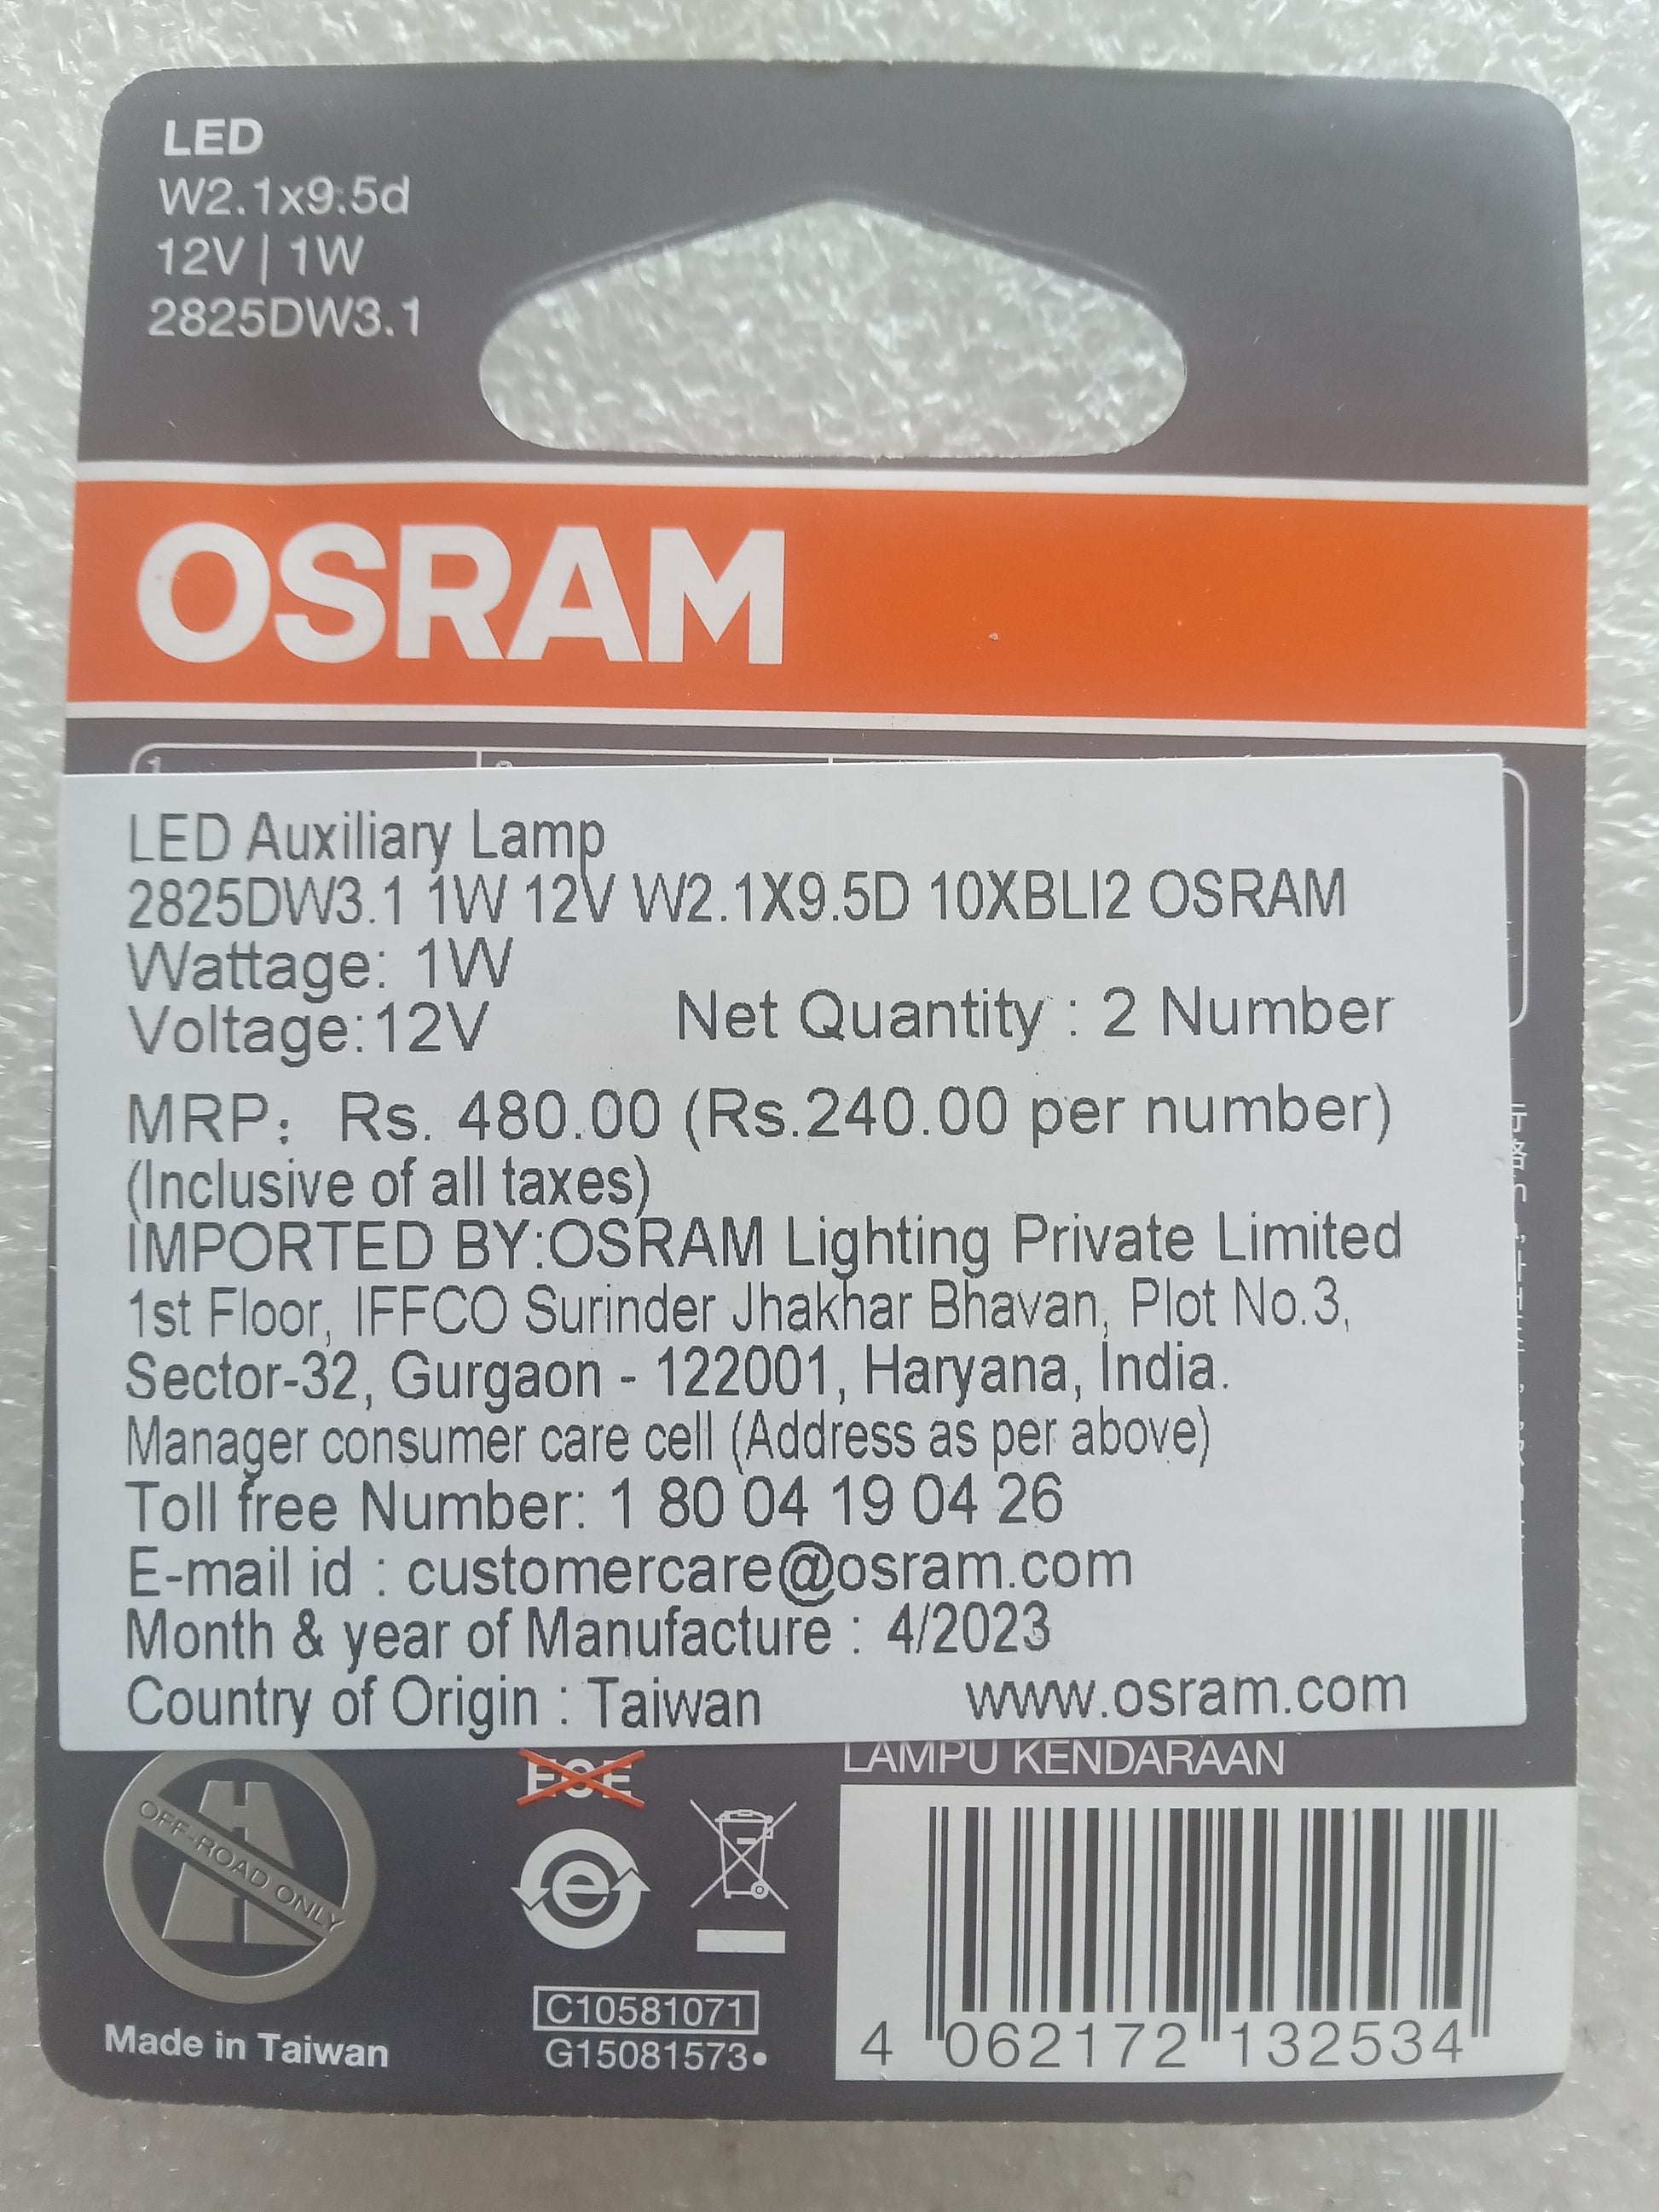 2 x OSRAM W5W ULTRA LIFE LAMPE BLISTER 12V 5W W2.1 India